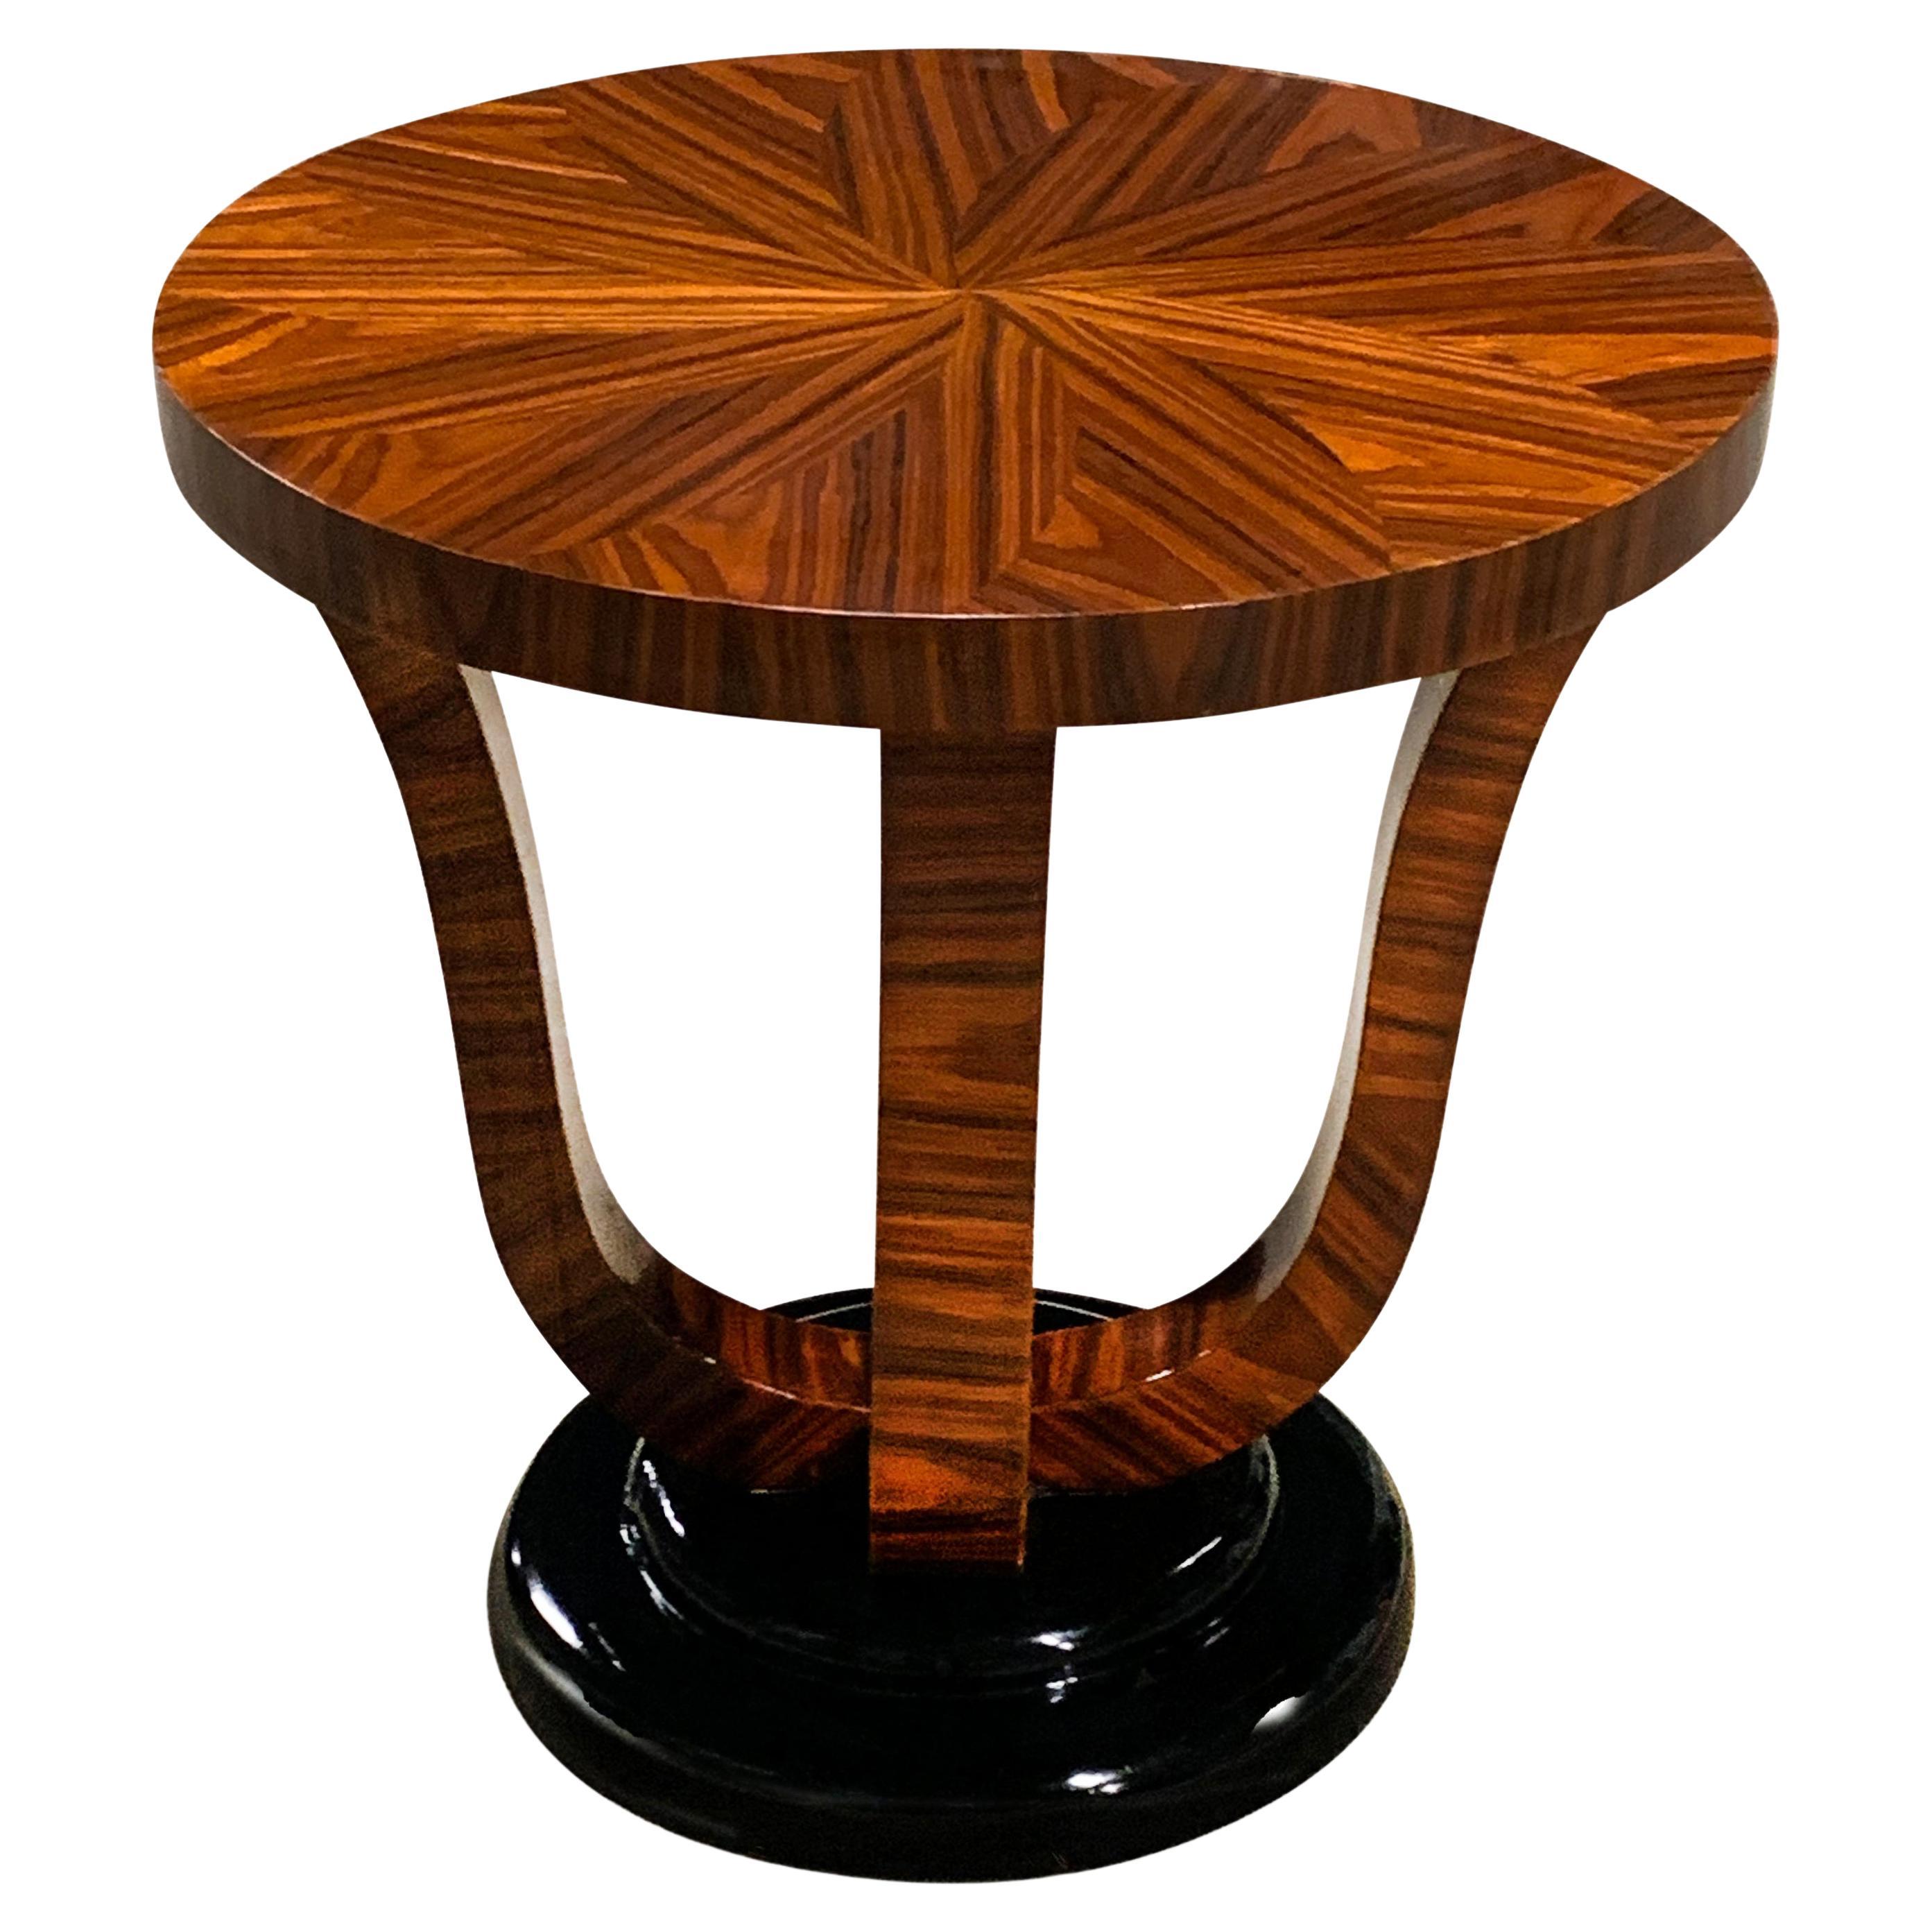 Jules Leleu Style Art Deco Pedestal Table With A Beautiful Rosewood Sunburst Top For Sale